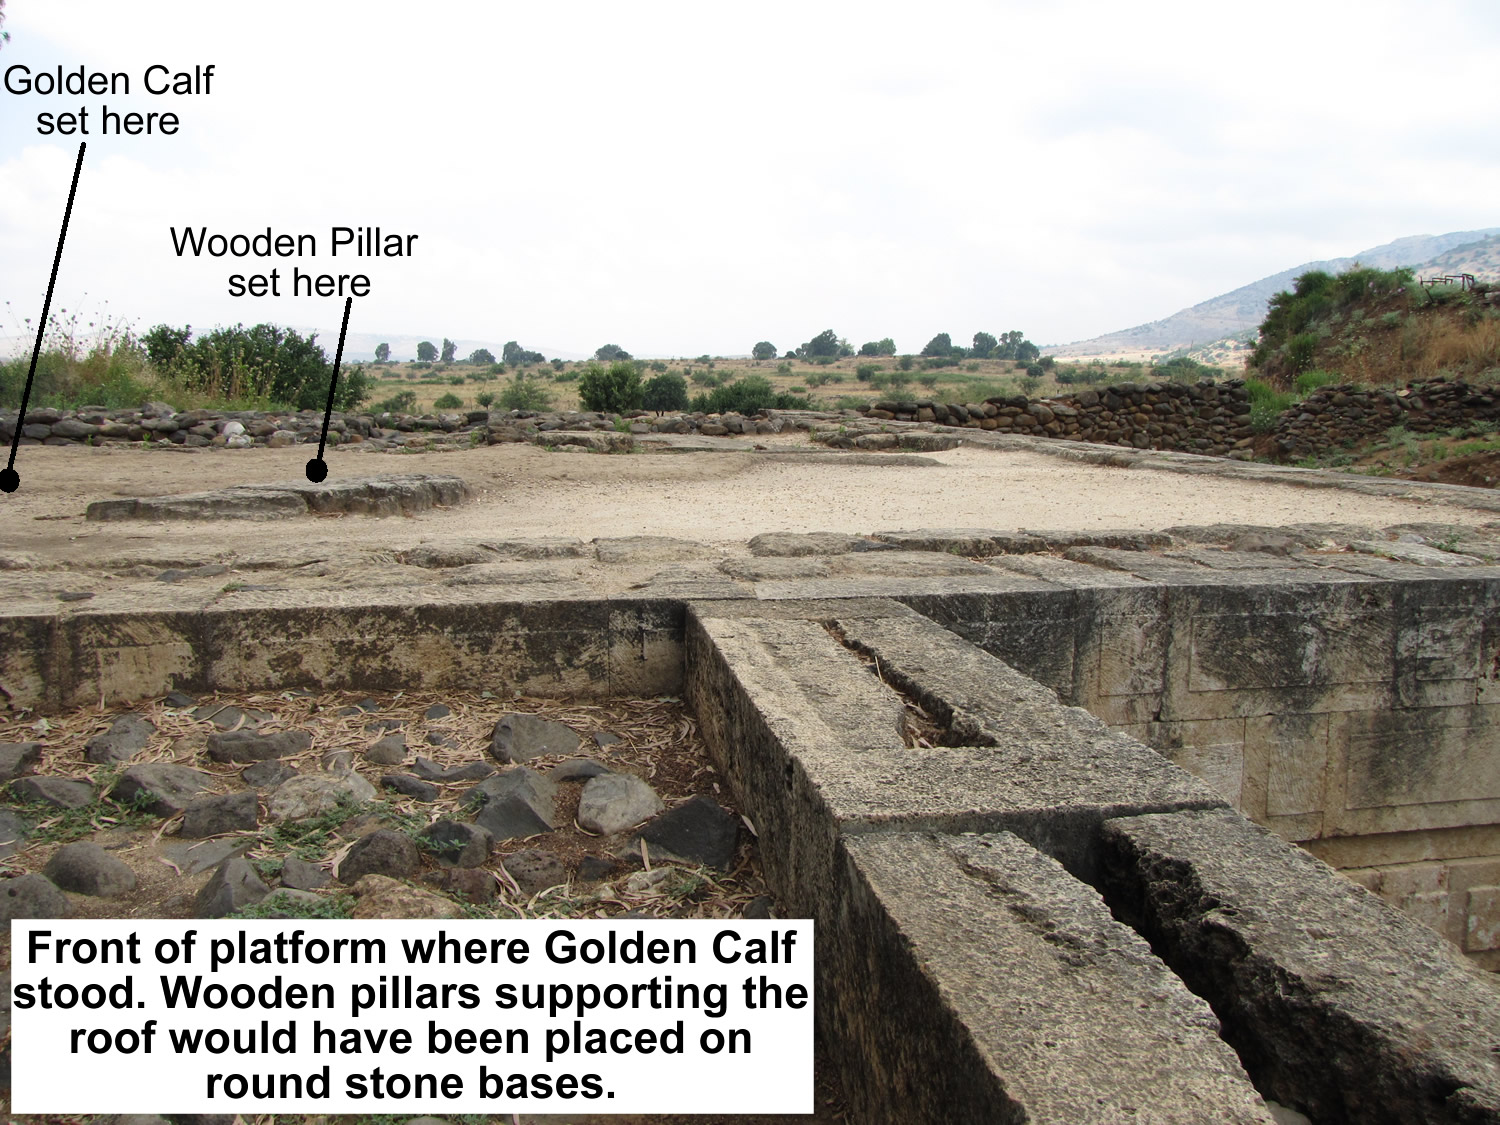 Front of the platform for the Golden Calf in Dan Israel